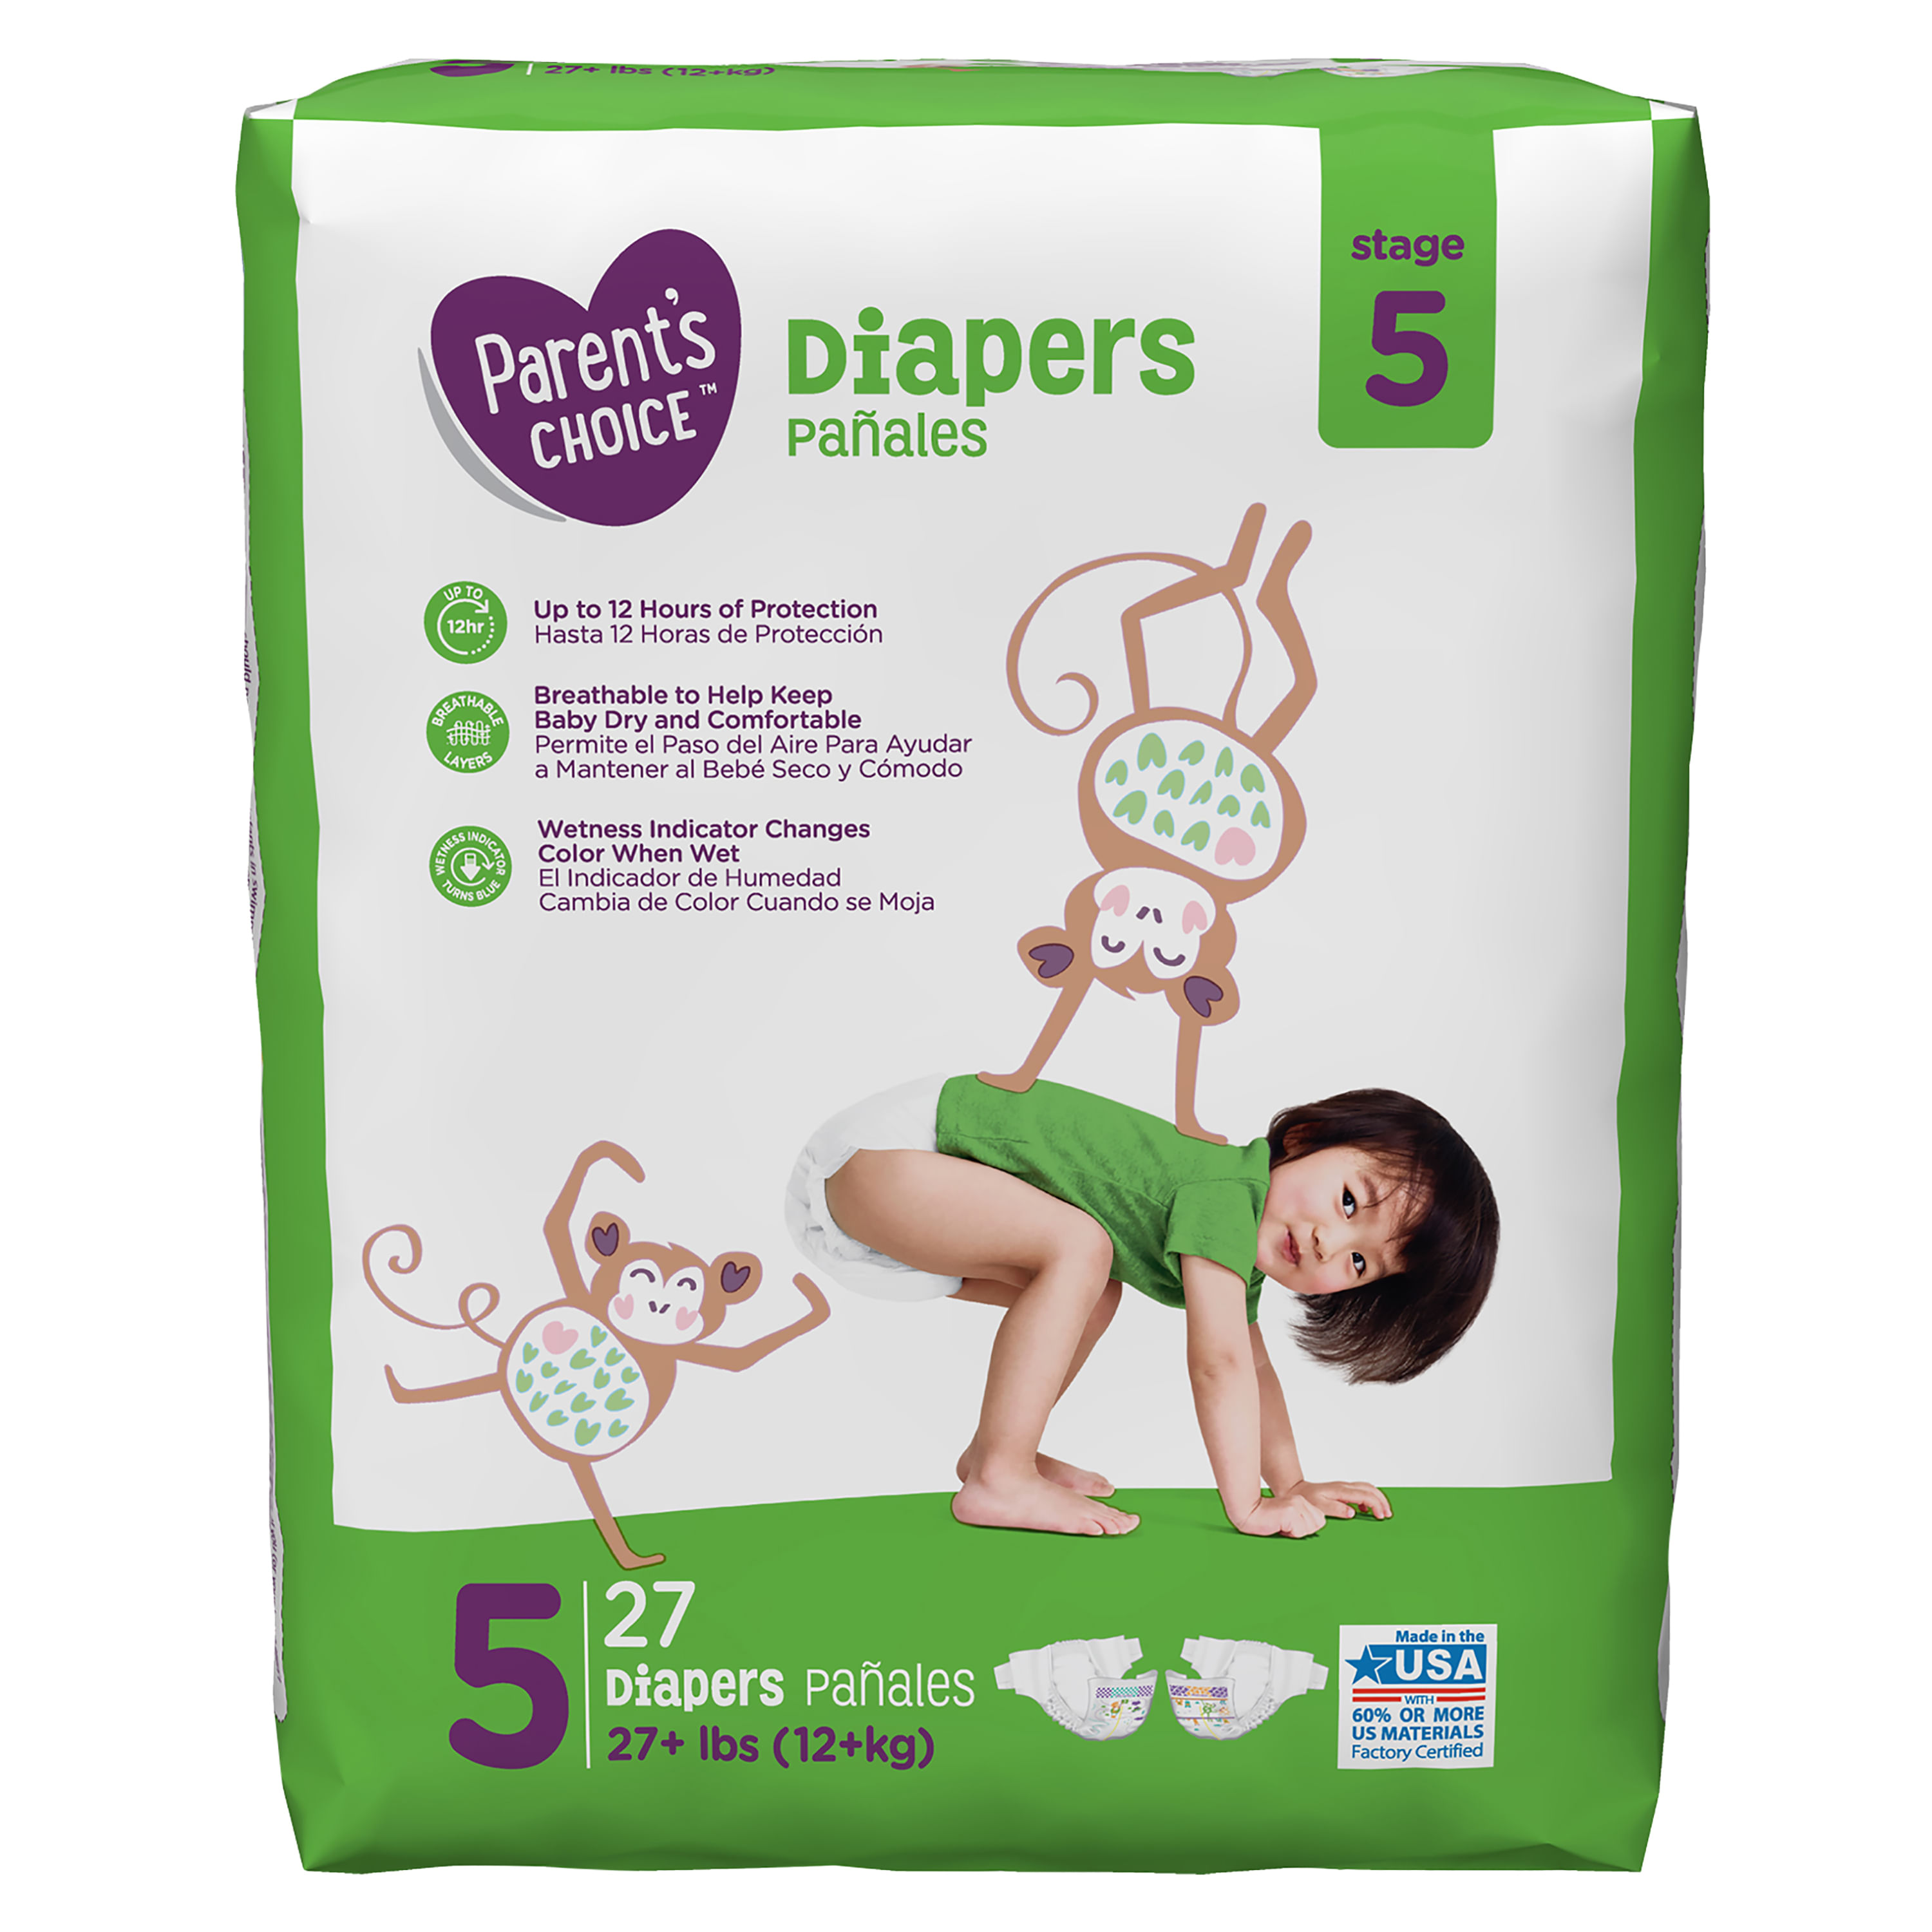 Pa-al-Parents-Choice-Baby-Diaper-Size-5-Jumbo-27-Unidades-1-9365